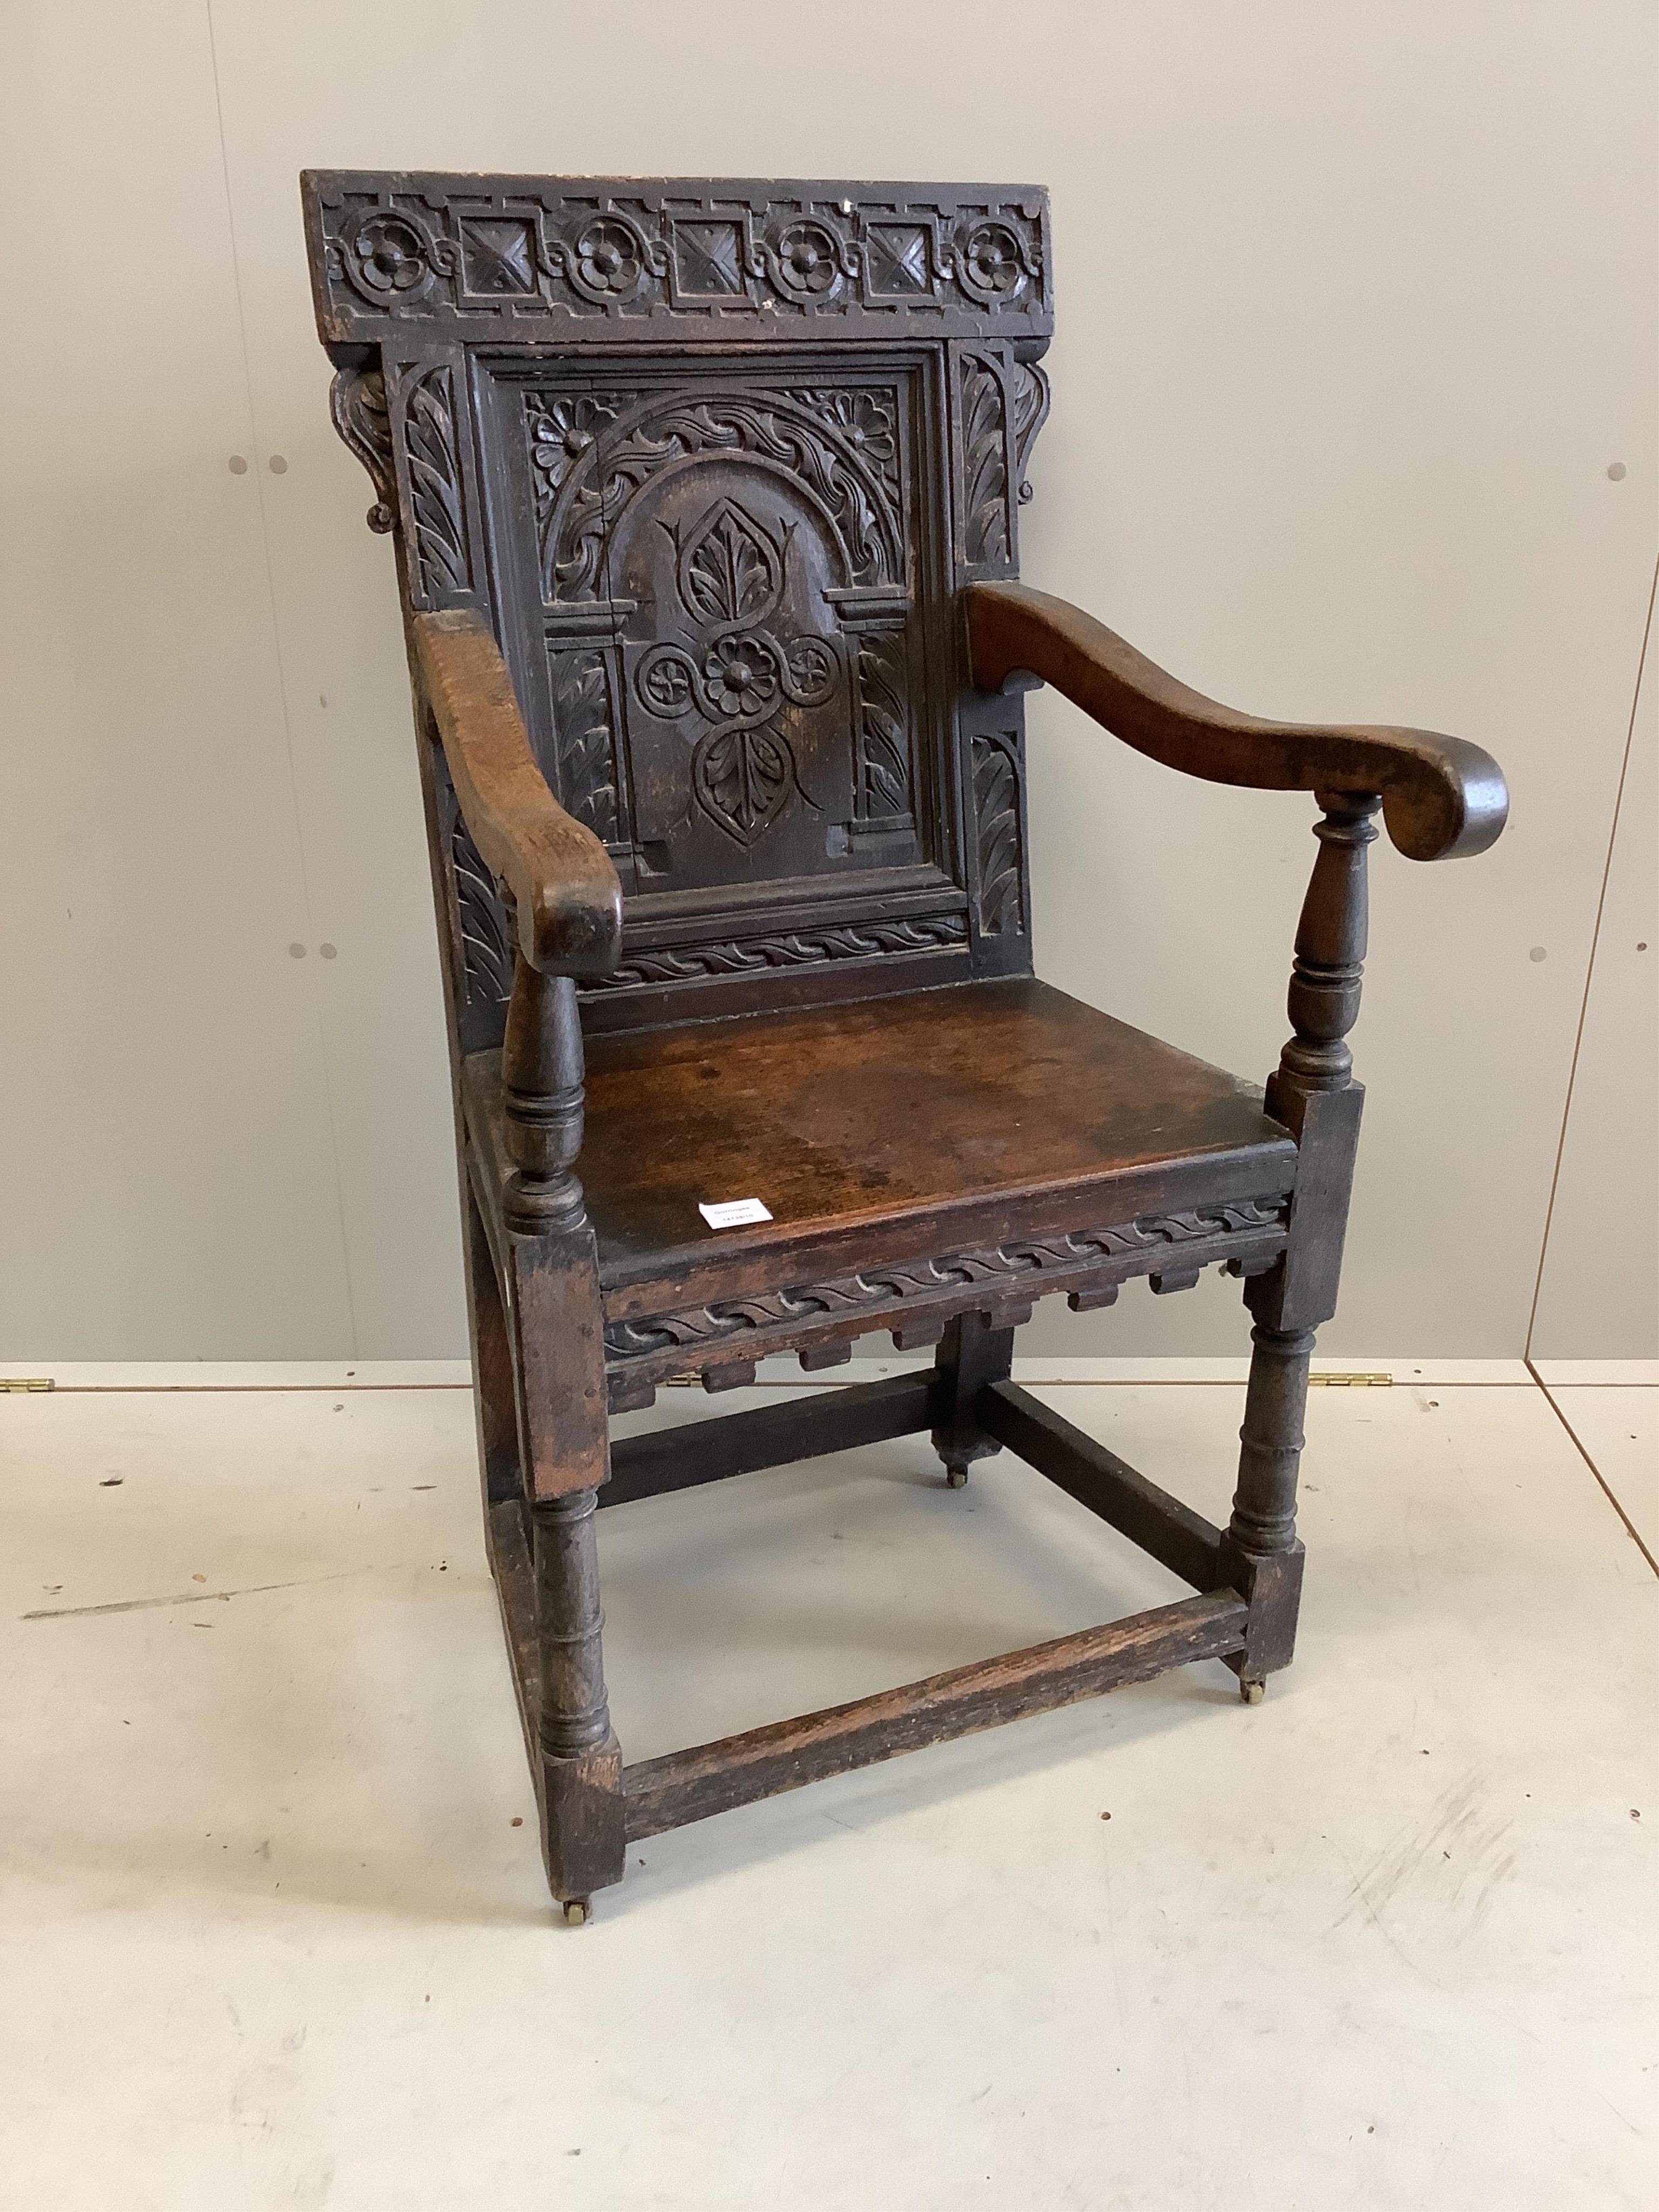 A 17th century oak wainscot type chair, width 61cm, depth 49cm, height 110cm. Condition - fair